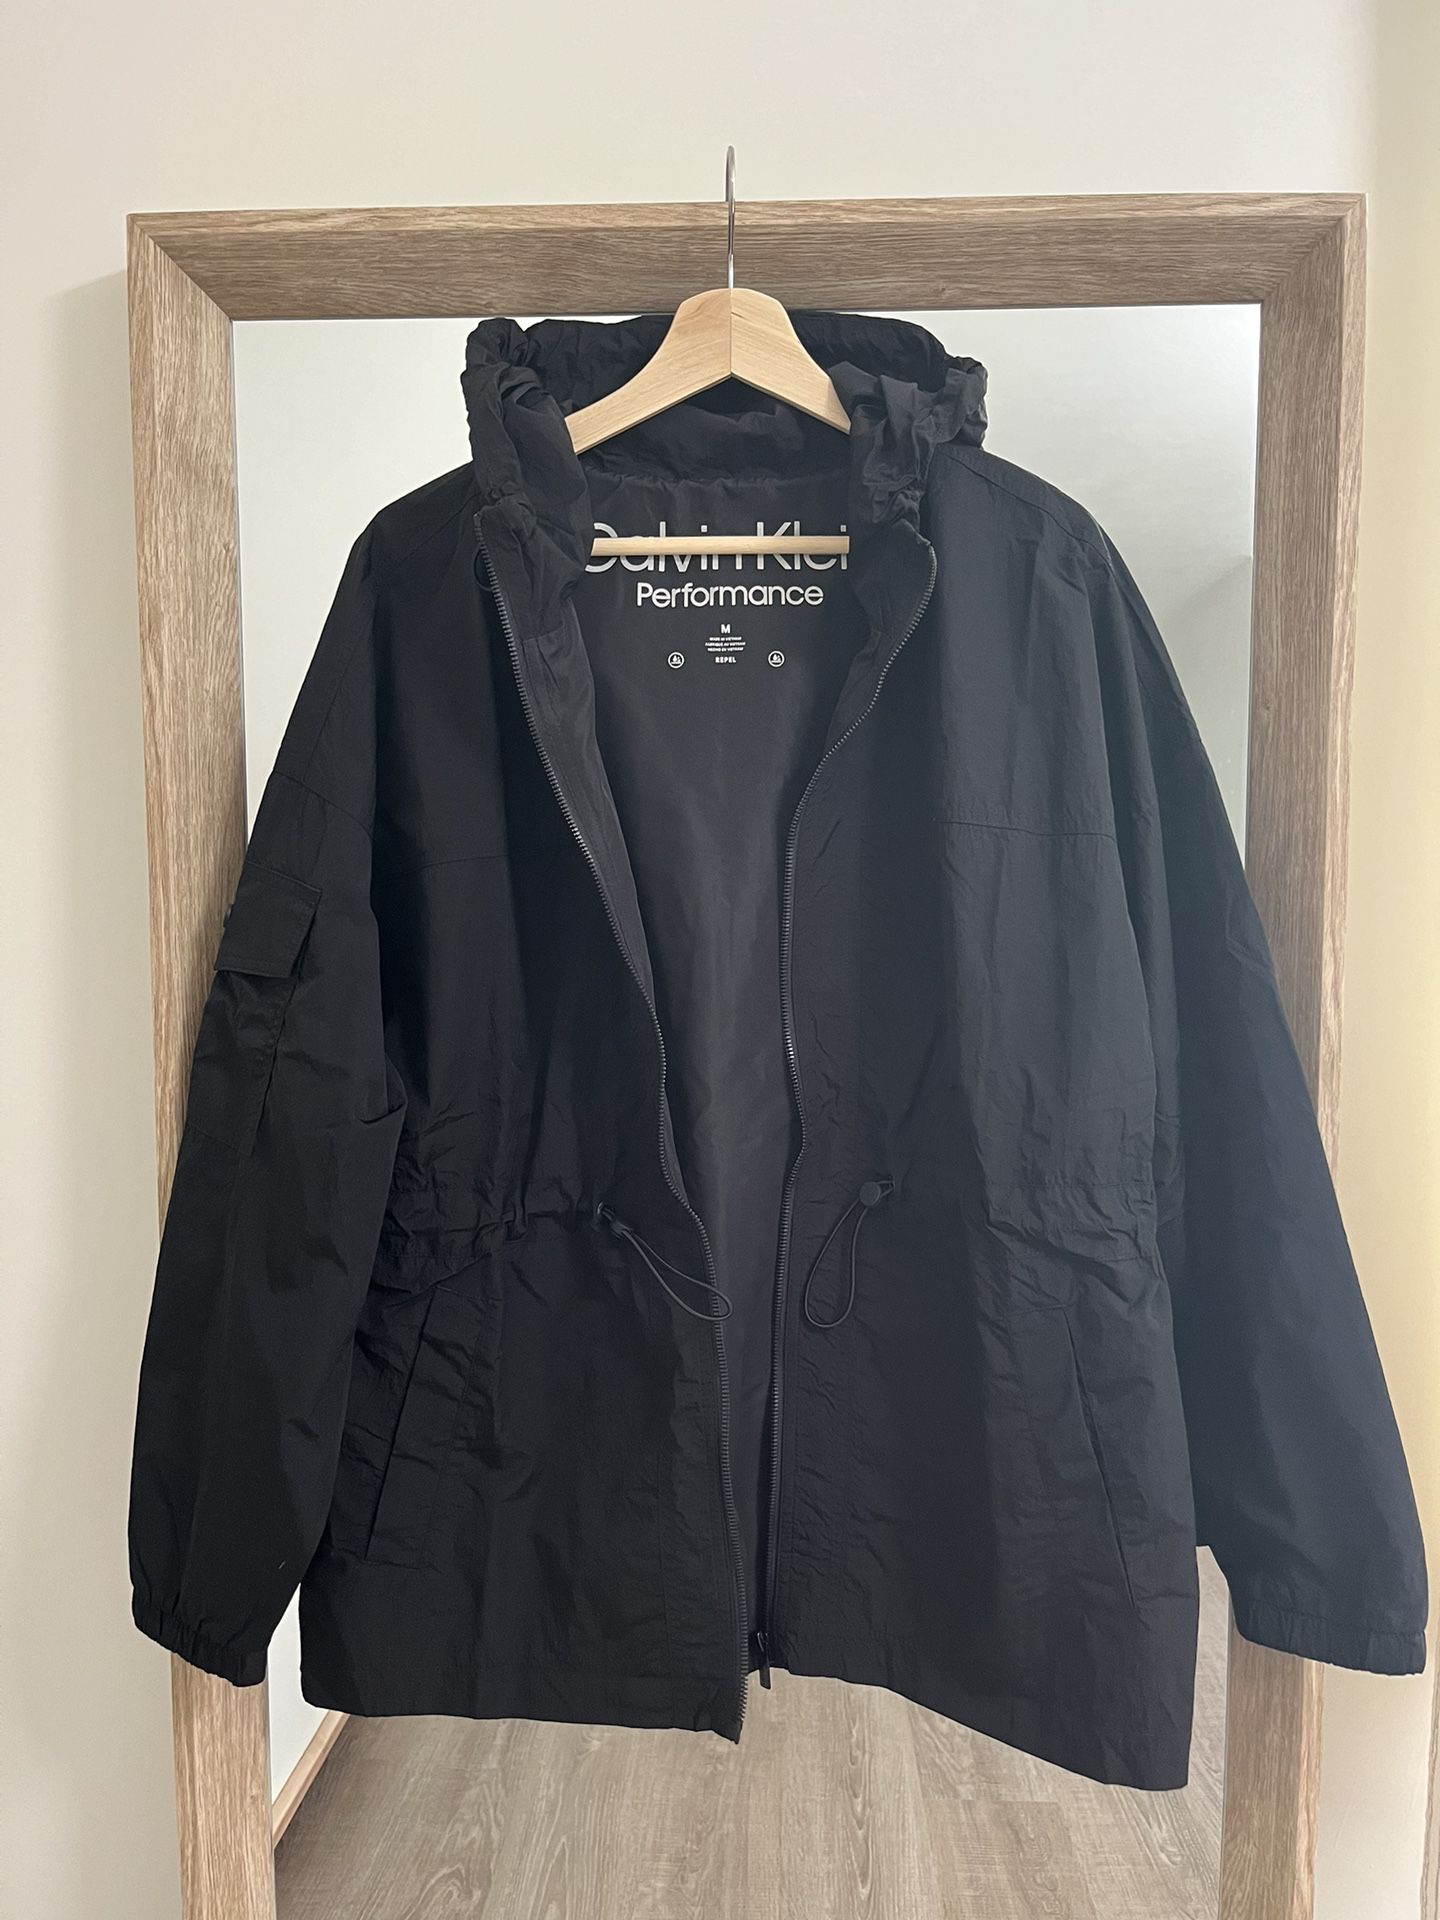 Calvin Klein Women’s Performance Repel Packable Jacket Raincoat Size M (NWT)